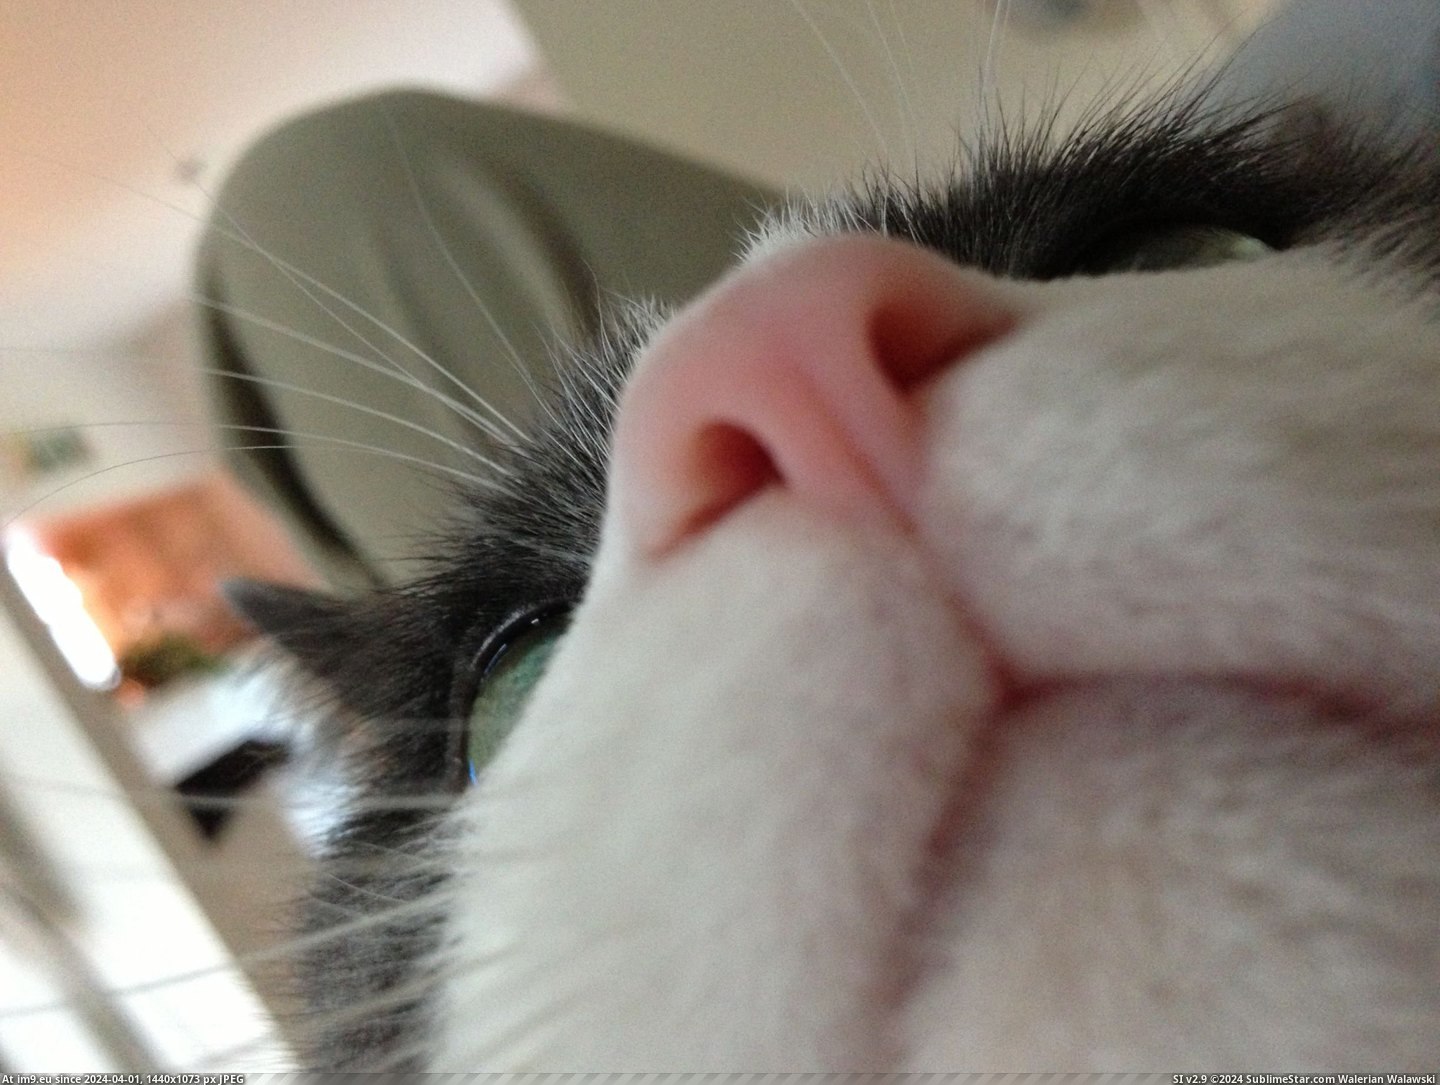 #Cats #Hooman #Nose [Cats] Look at my nose, hooman. Pic. (Obraz z album My r/CATS favs))